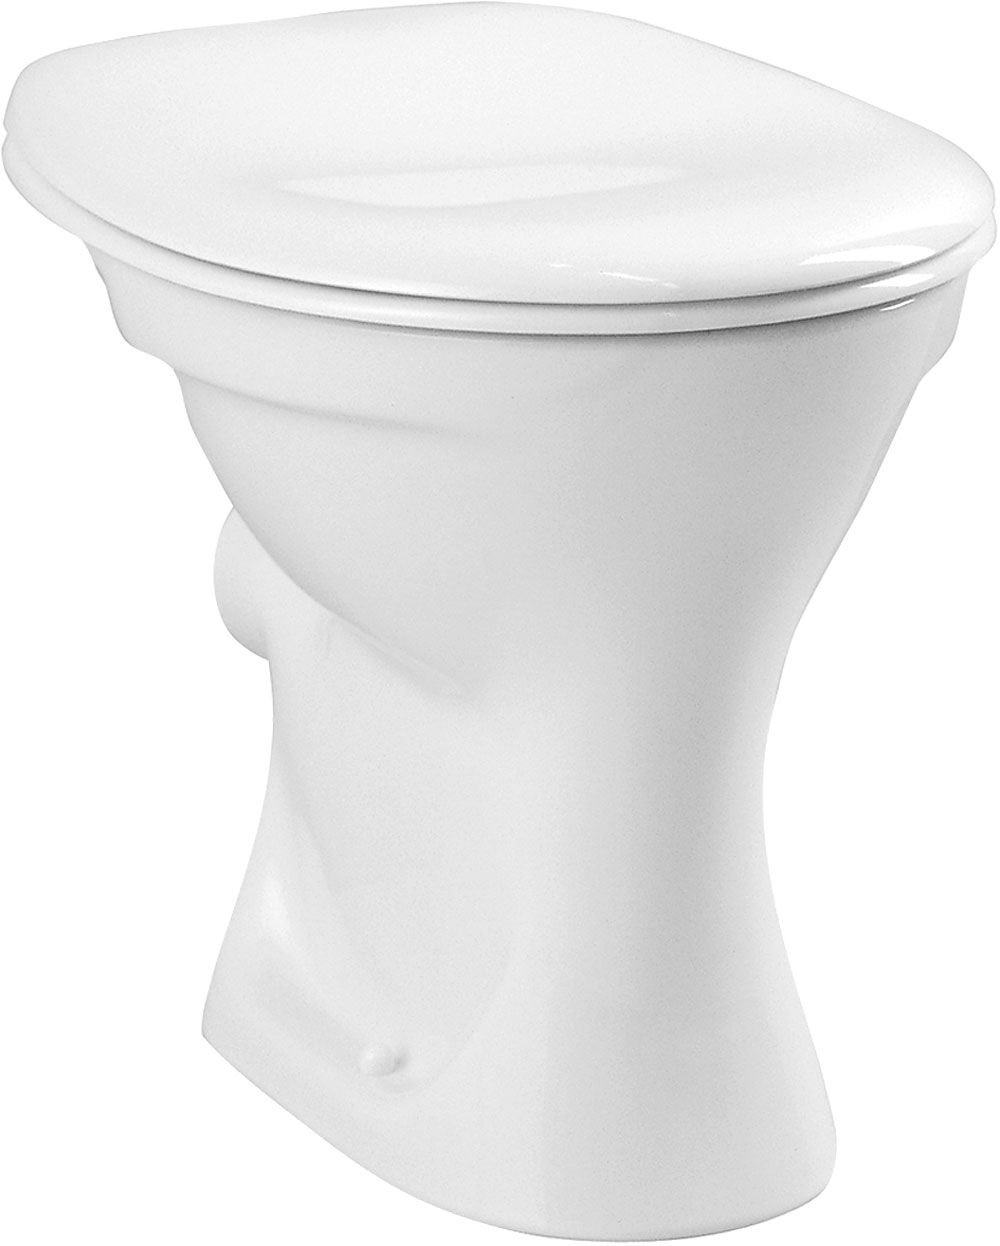 SYDNEY floor mounted toilet bowl, standard, P-trap